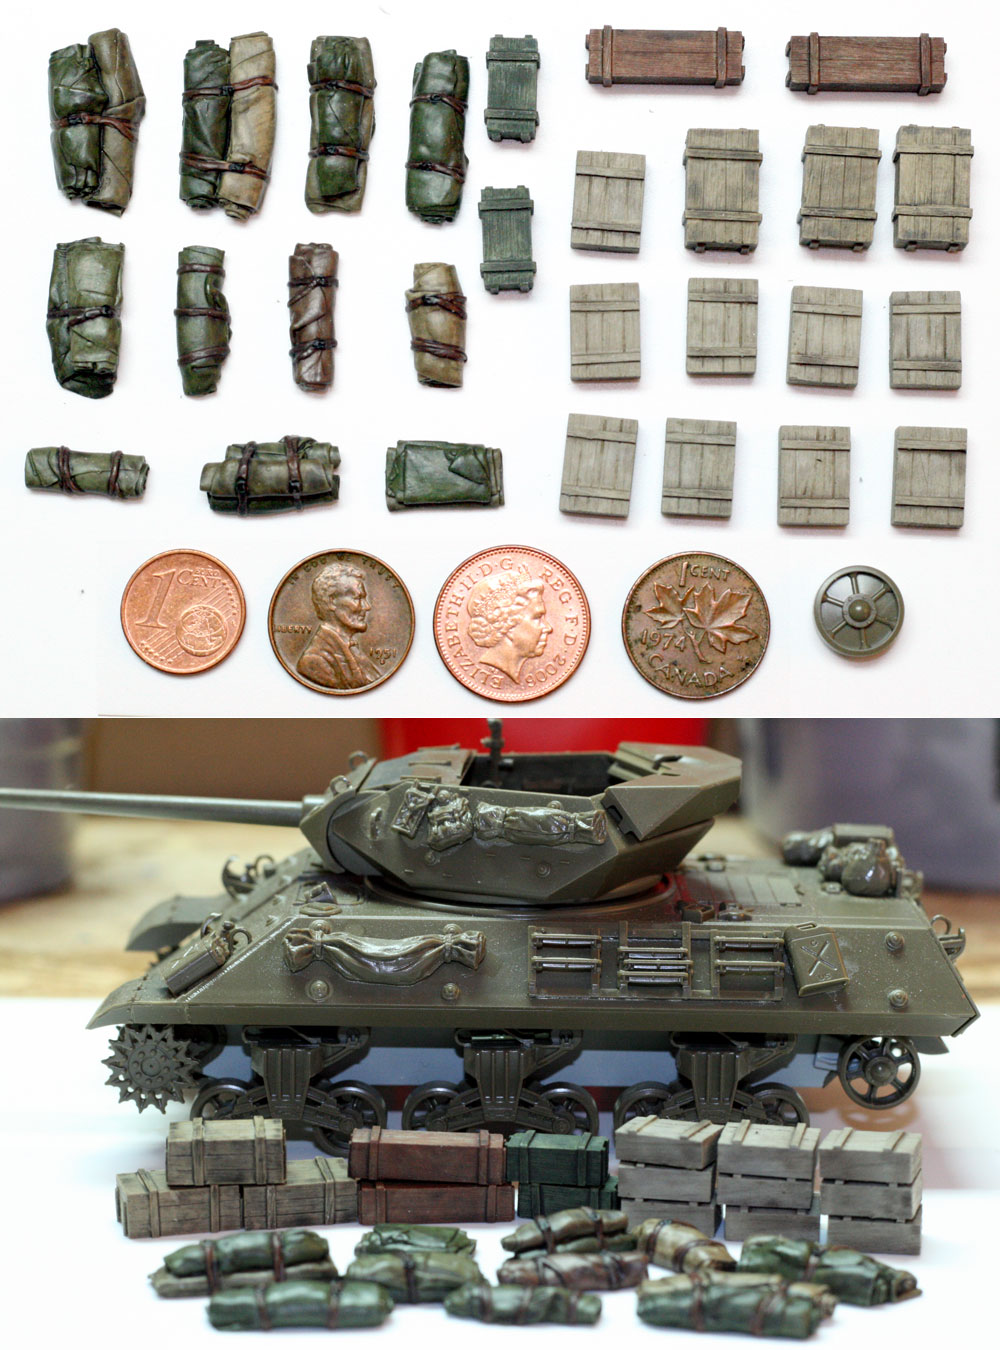 1/48 US M4A1 Sherman Tank 32523 Tamiya